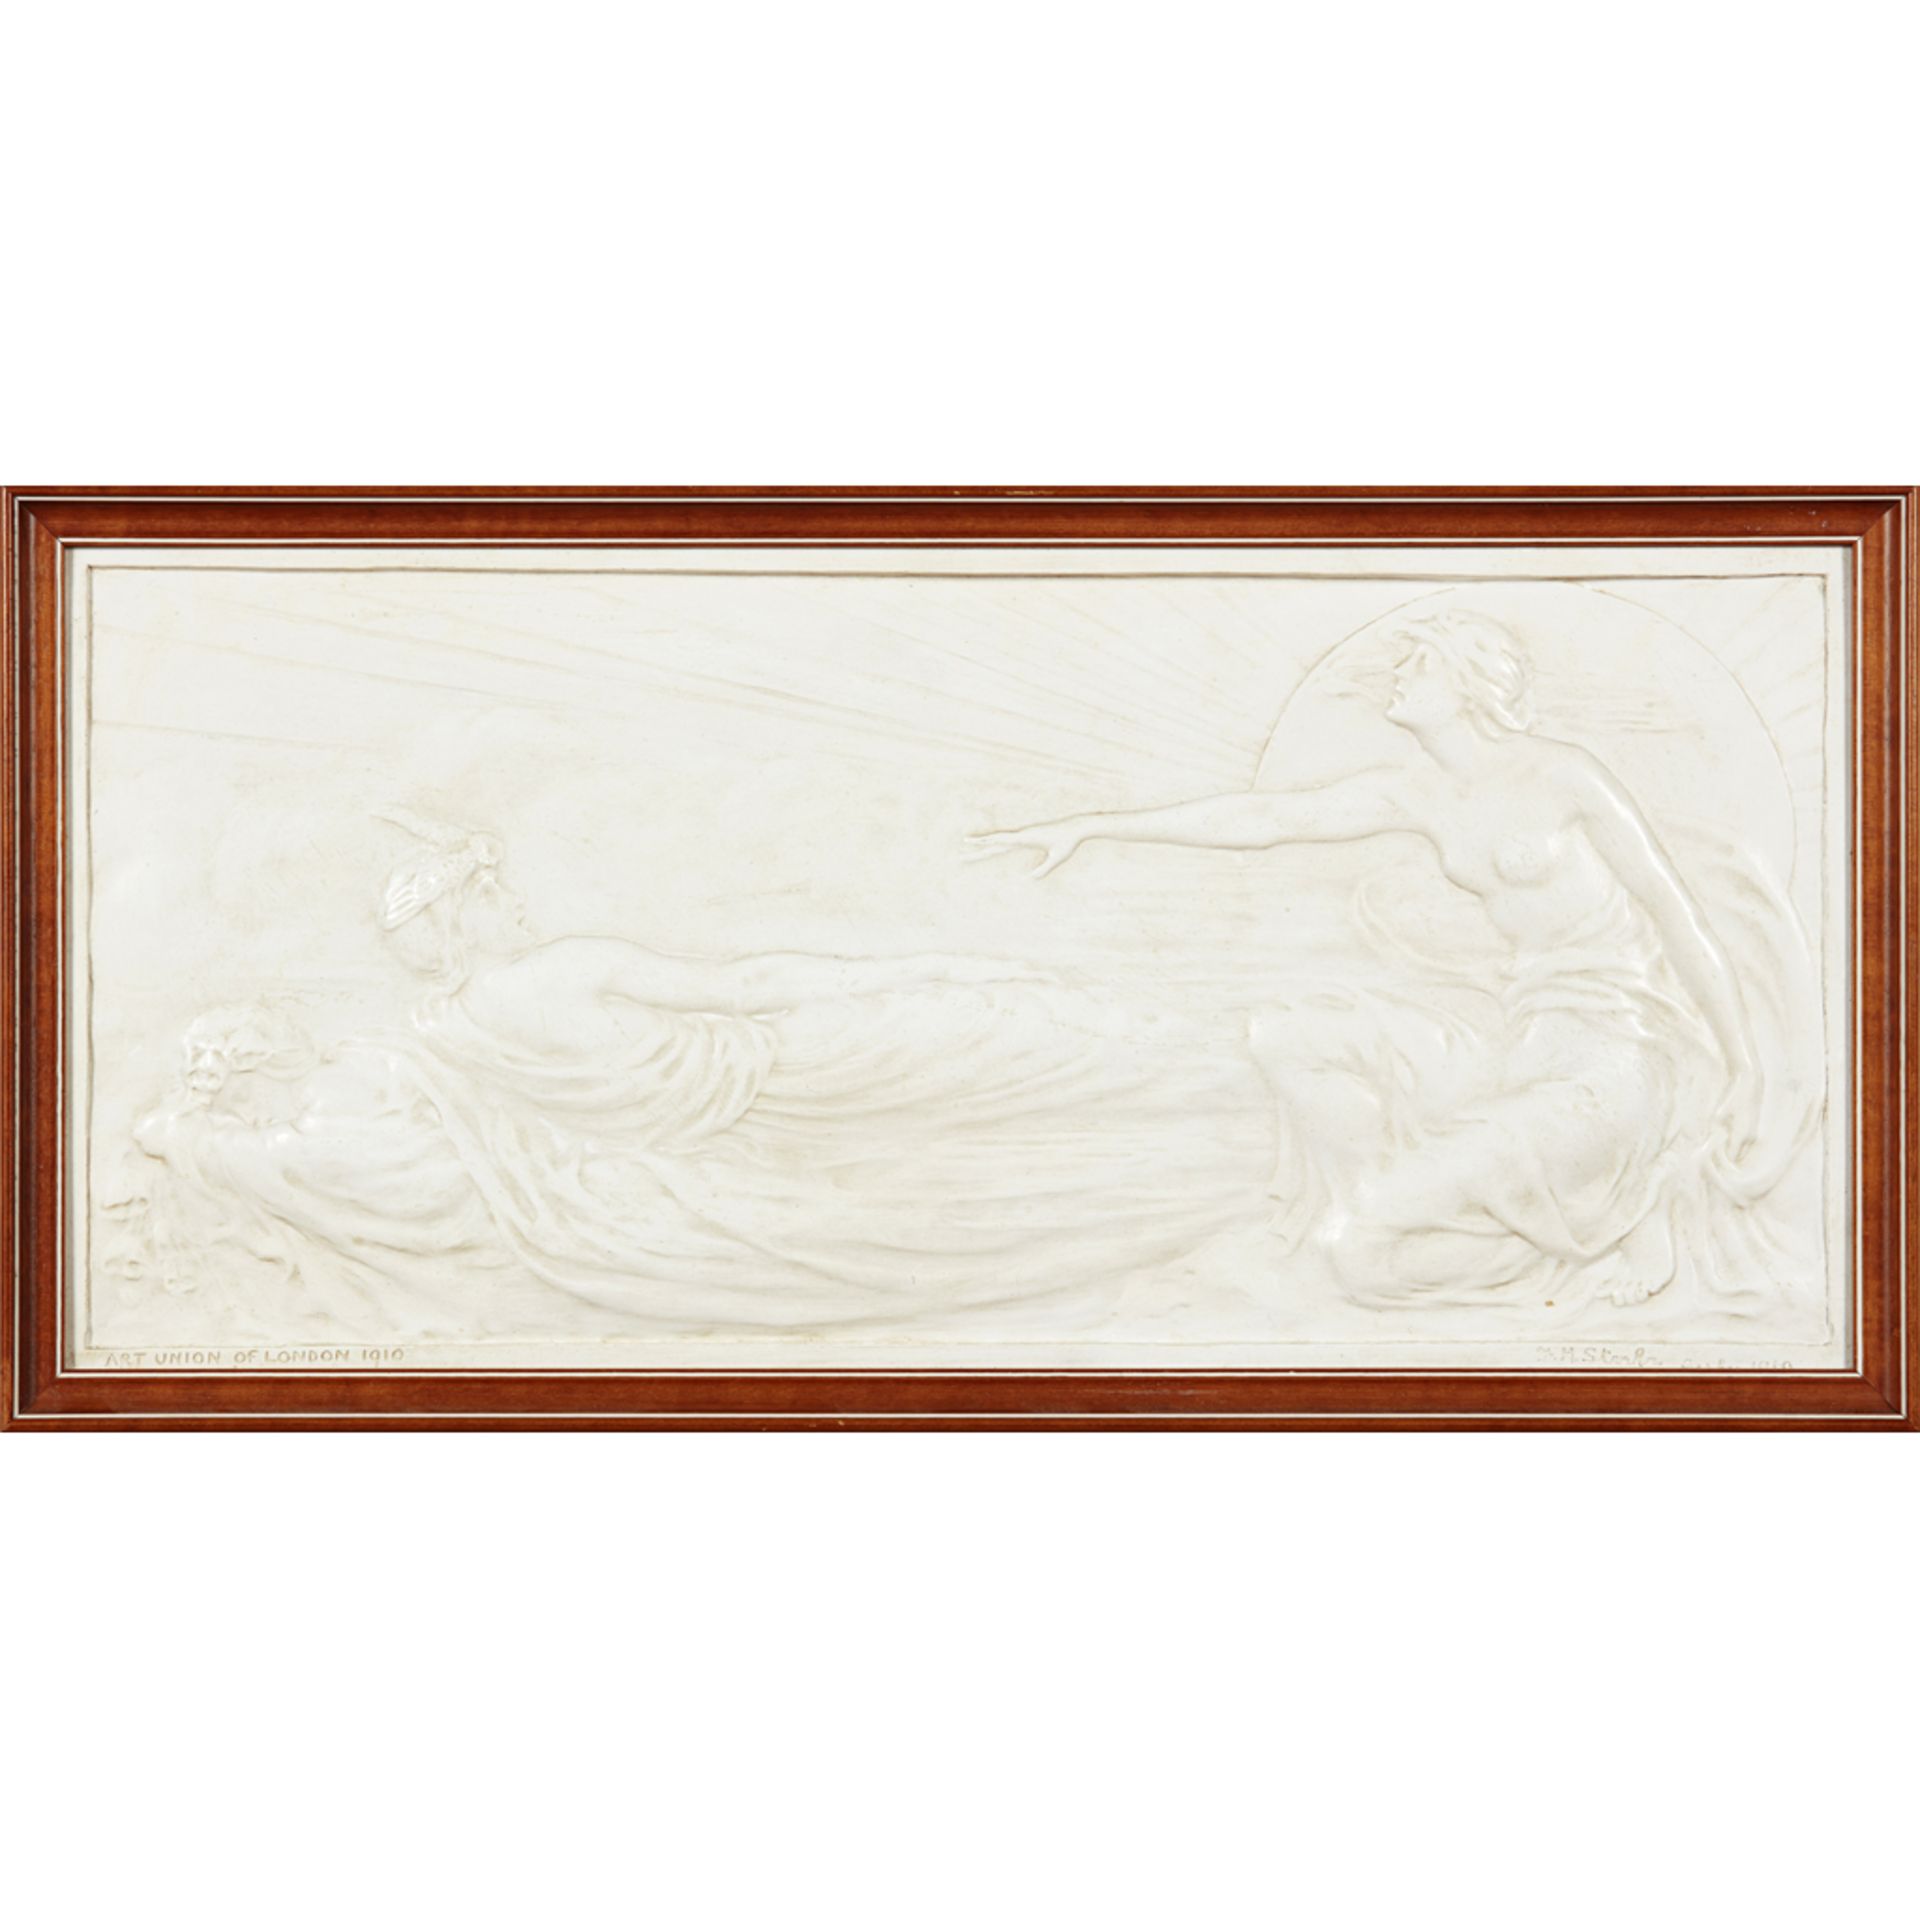 FLORENCE HARRIET STEELE (1857-1948) 'DAWN DISPELLING SLEEP AND NIGHT' PAINTED PLASTER PANEL, 1910 - Image 2 of 2